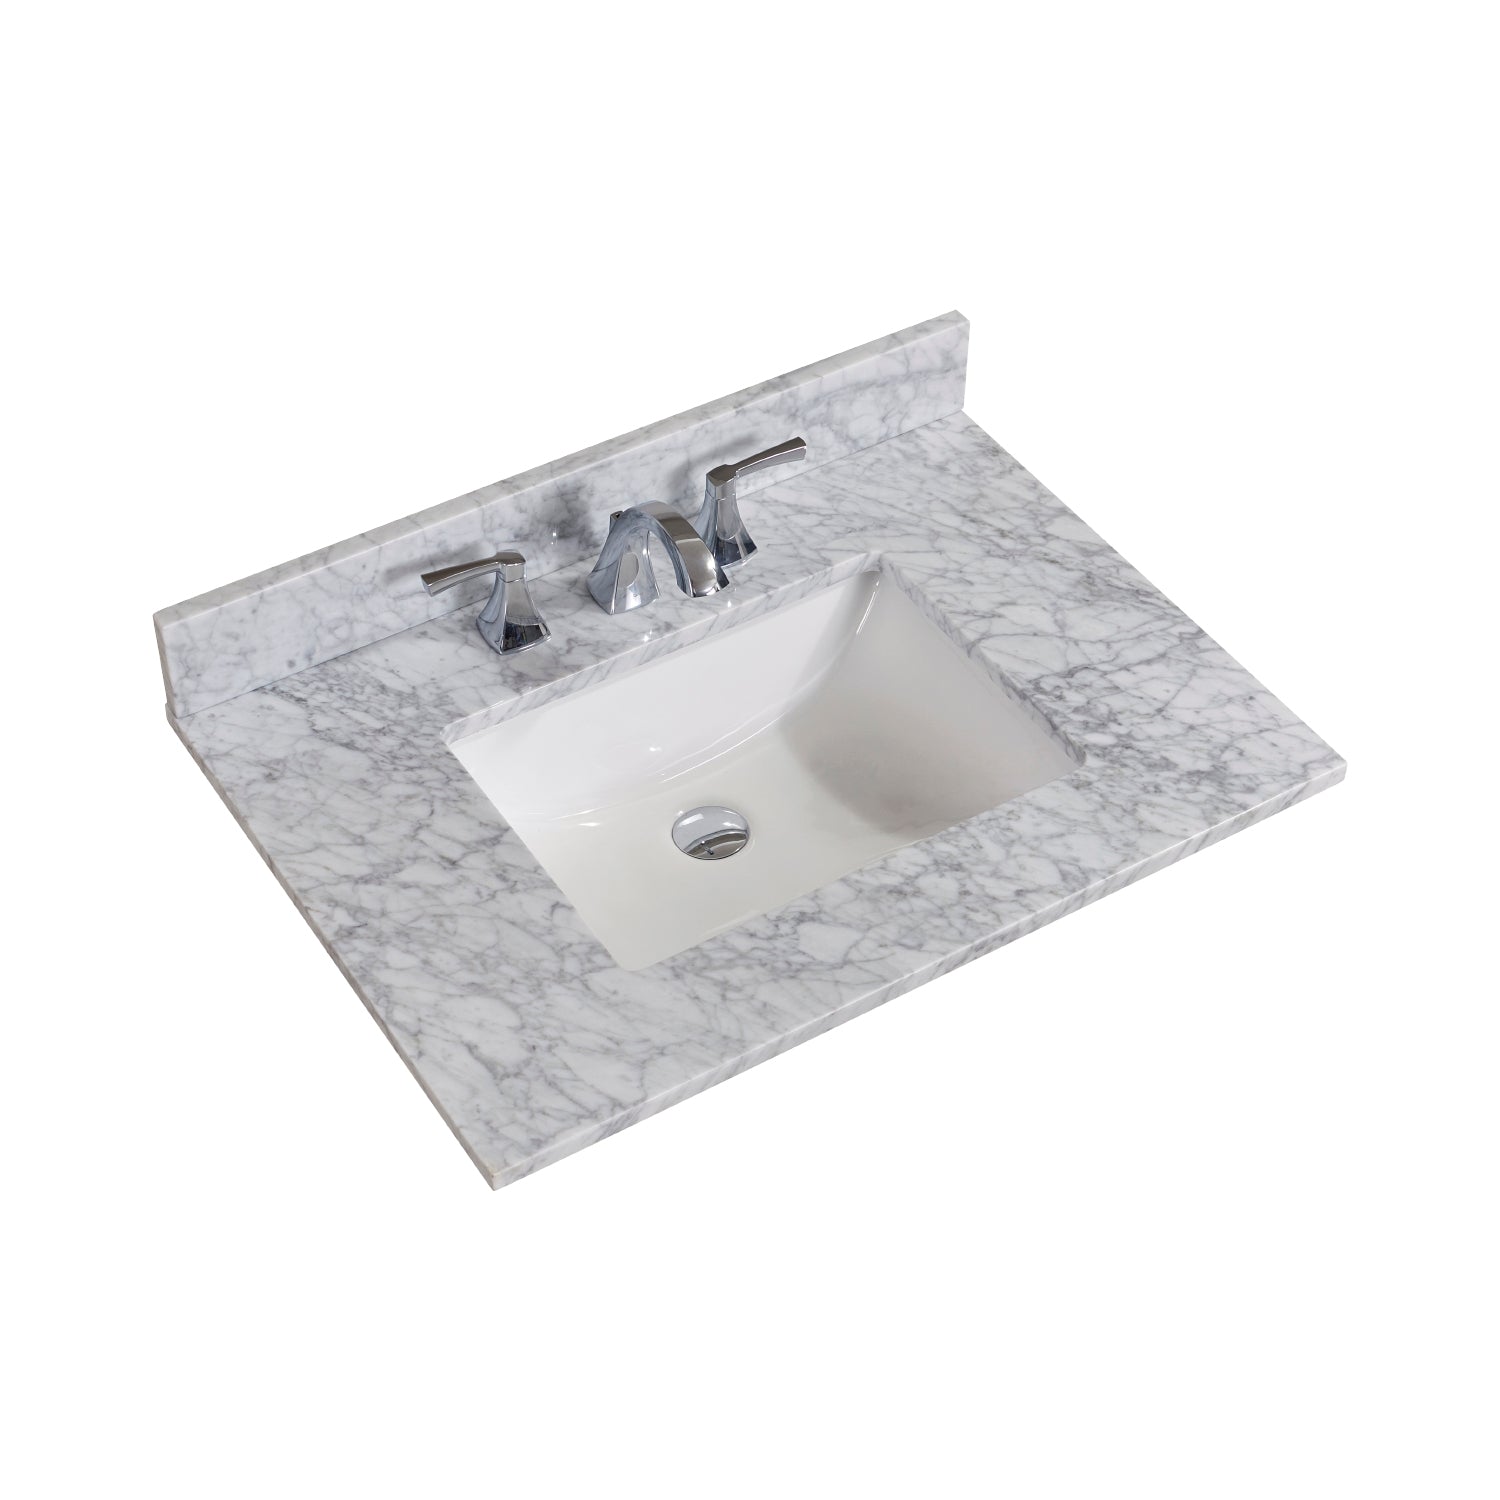 Oristano Single Sink Bathroom Vanity Countertop in White Carrara Marble